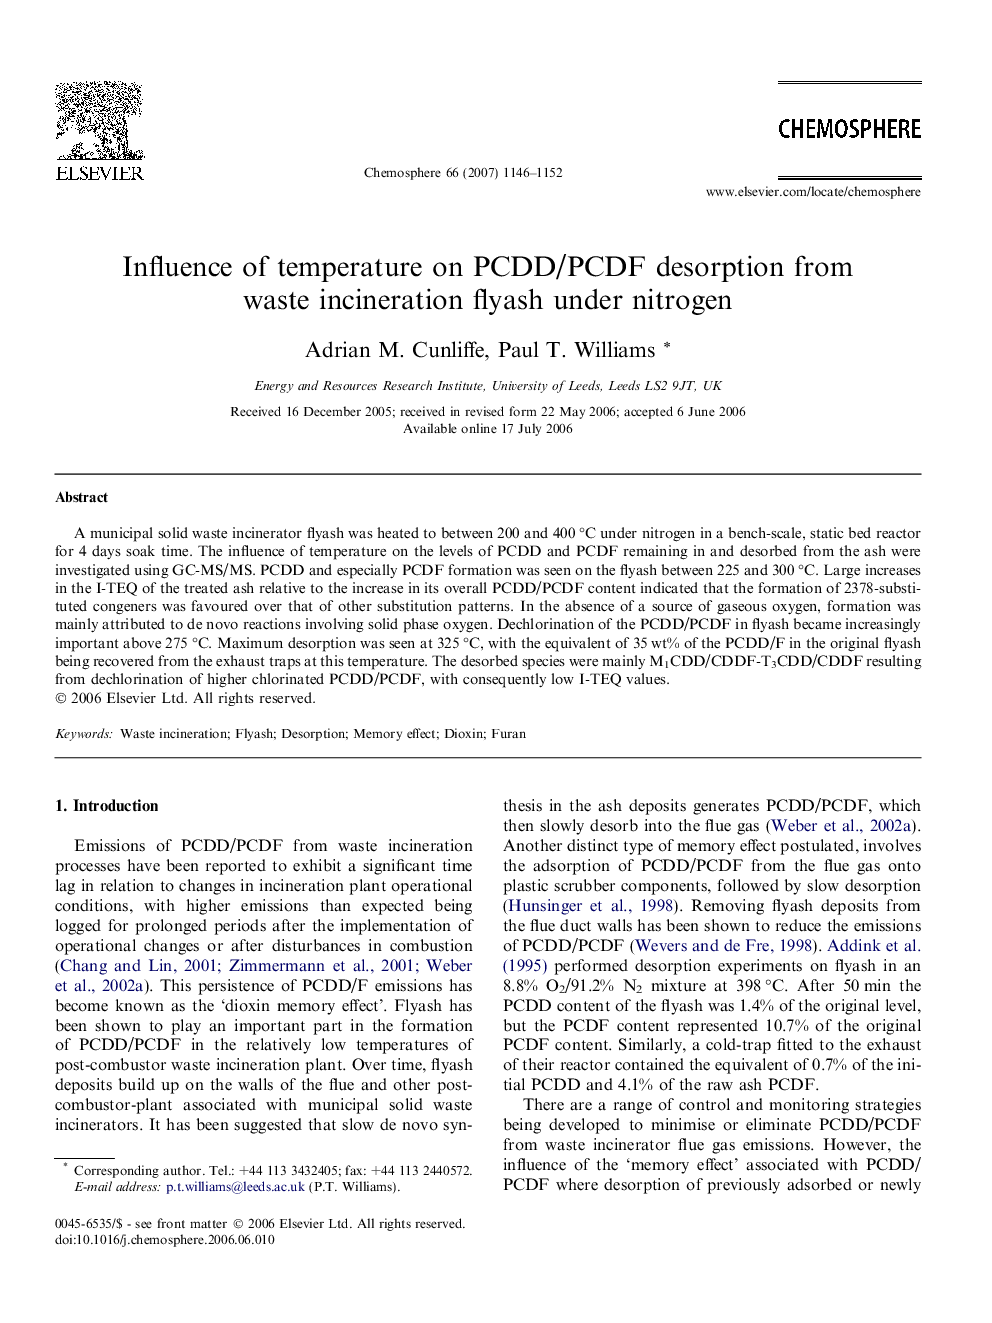 Influence of temperature on PCDD/PCDF desorption from waste incineration flyash under nitrogen